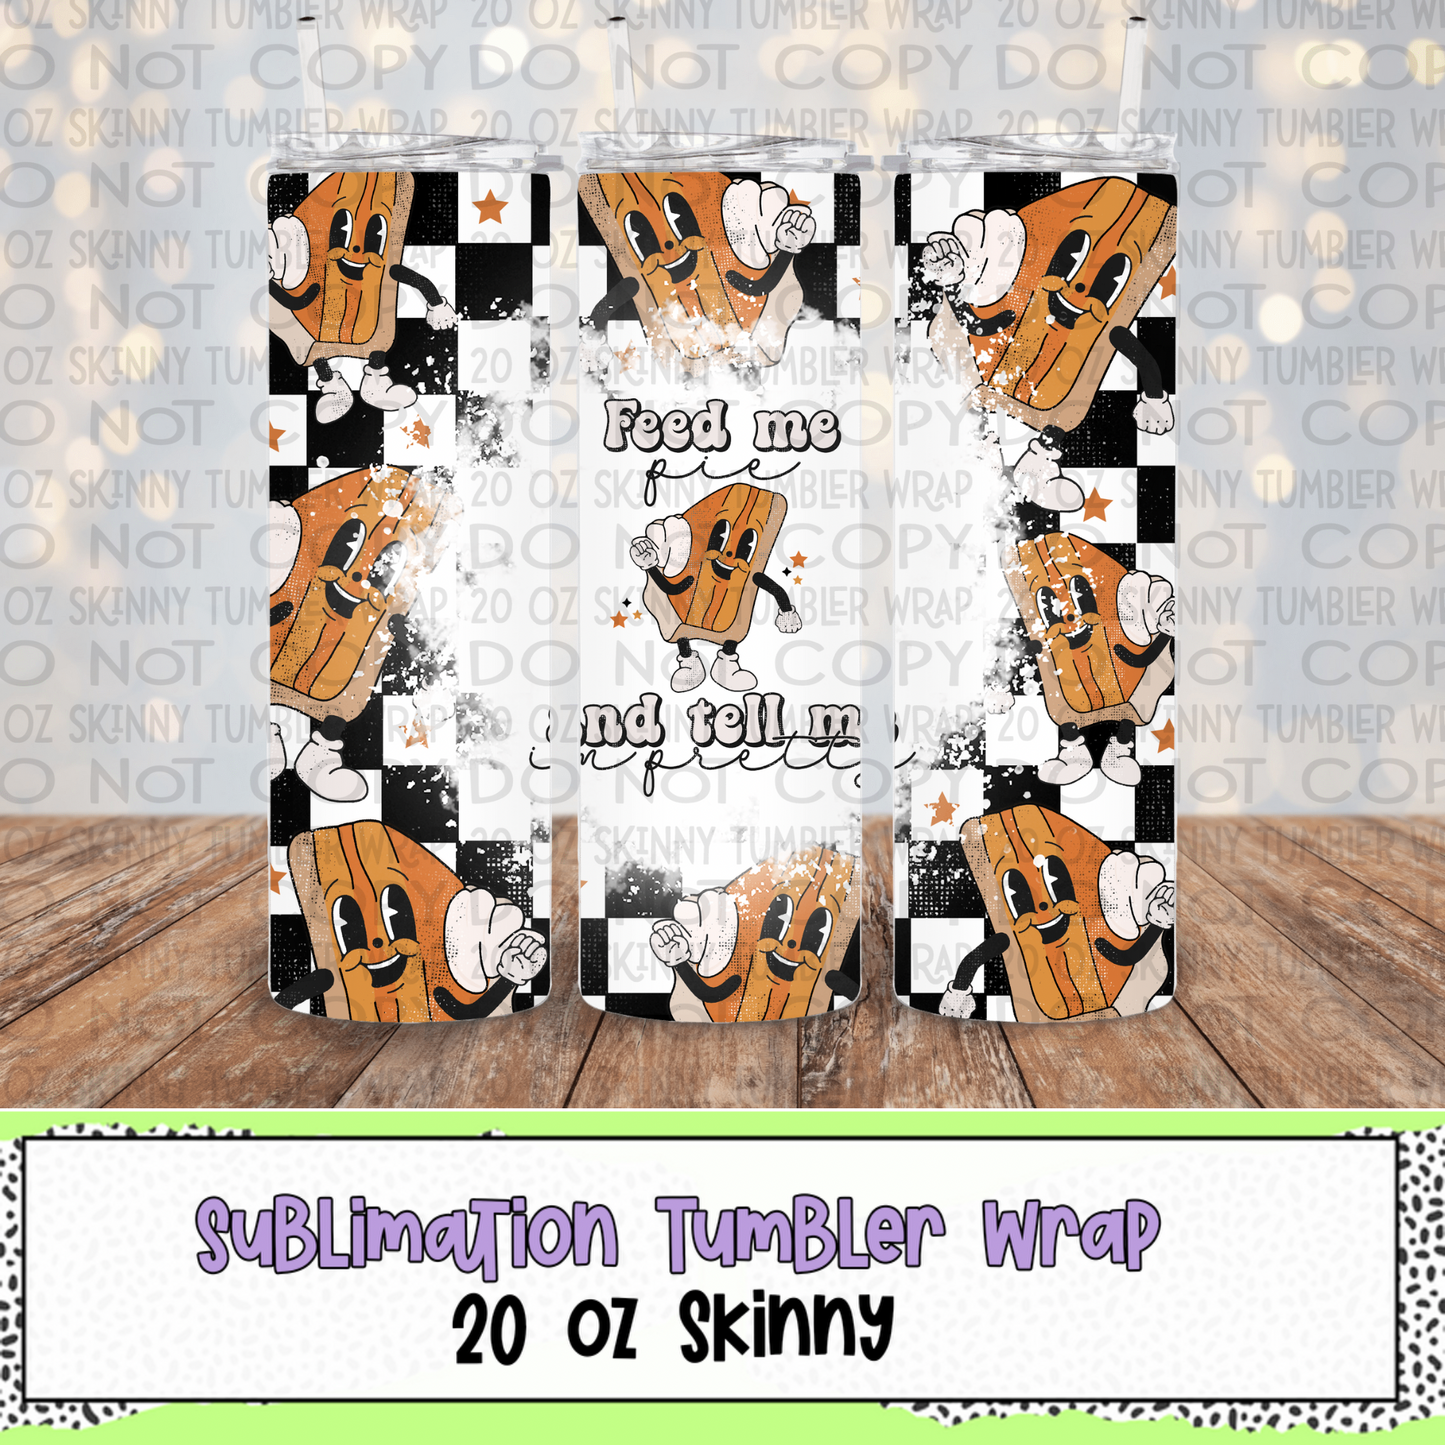 Feed Me Pie 20 Oz Skinny Tumbler Wrap - Sublimation Transfer - RTS